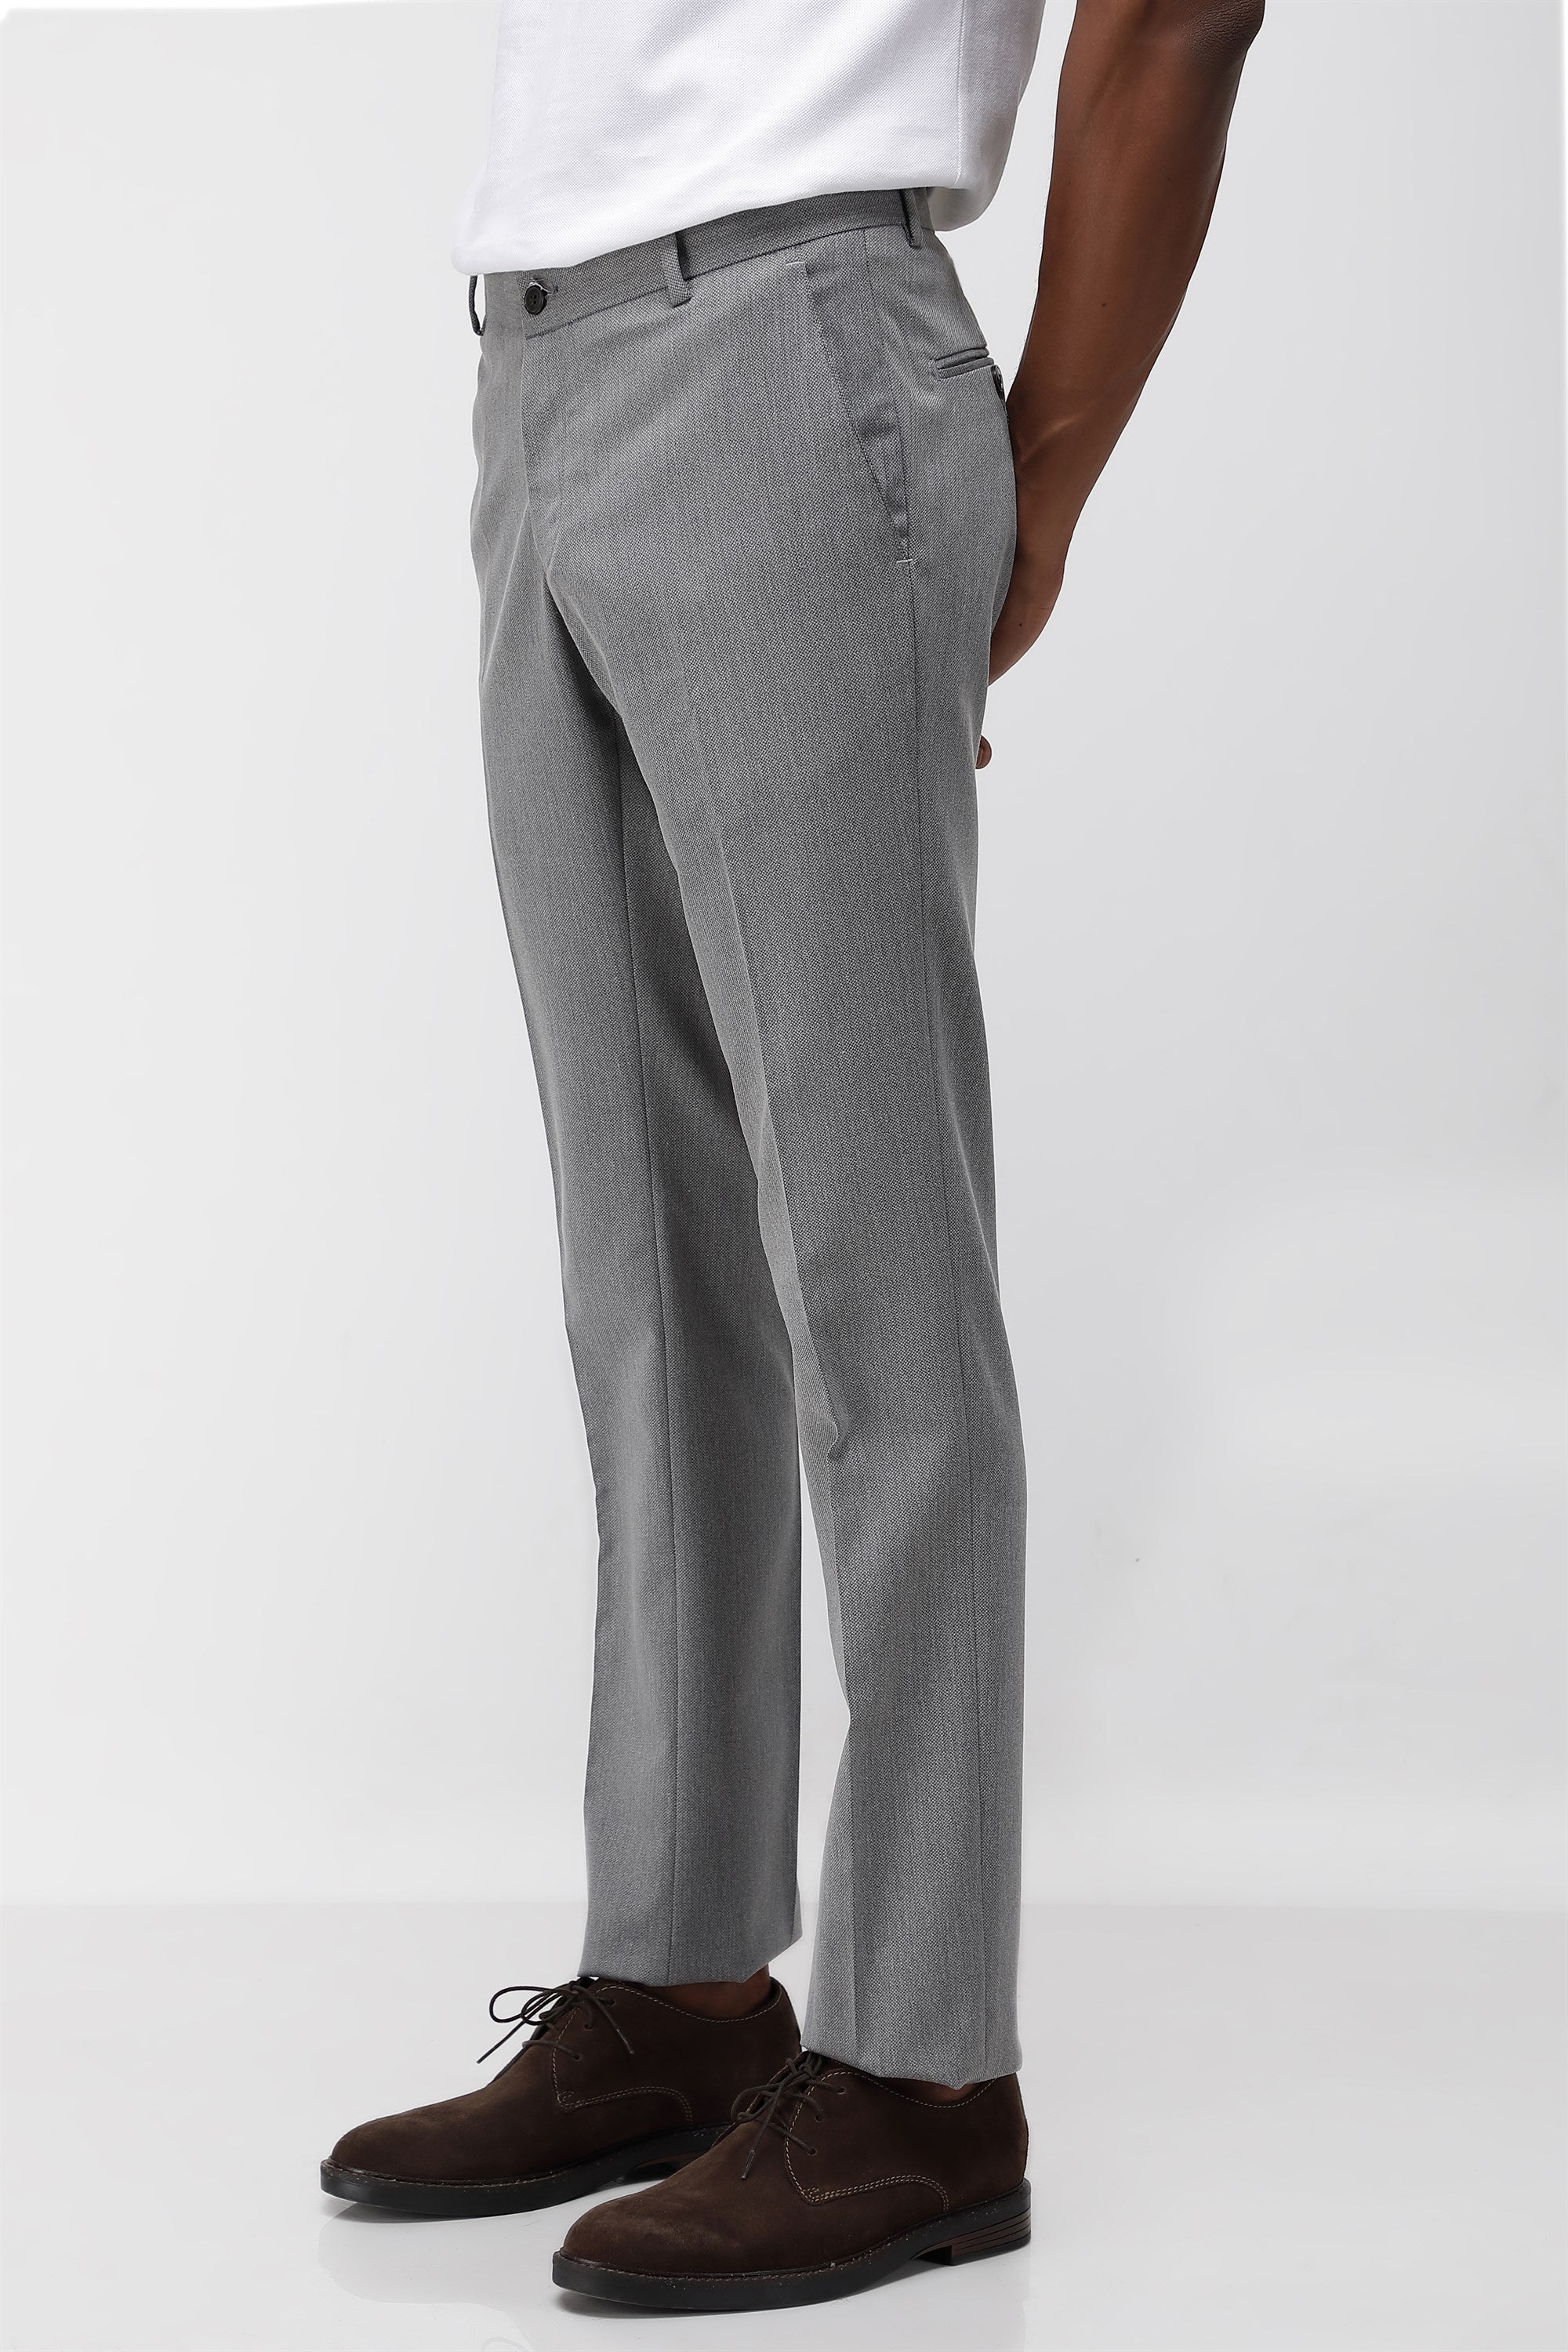 Autumn Solid High Waist Trousers Men Formal Pants High Quality Slim Fit  Business Casual Suit Pants Hommes